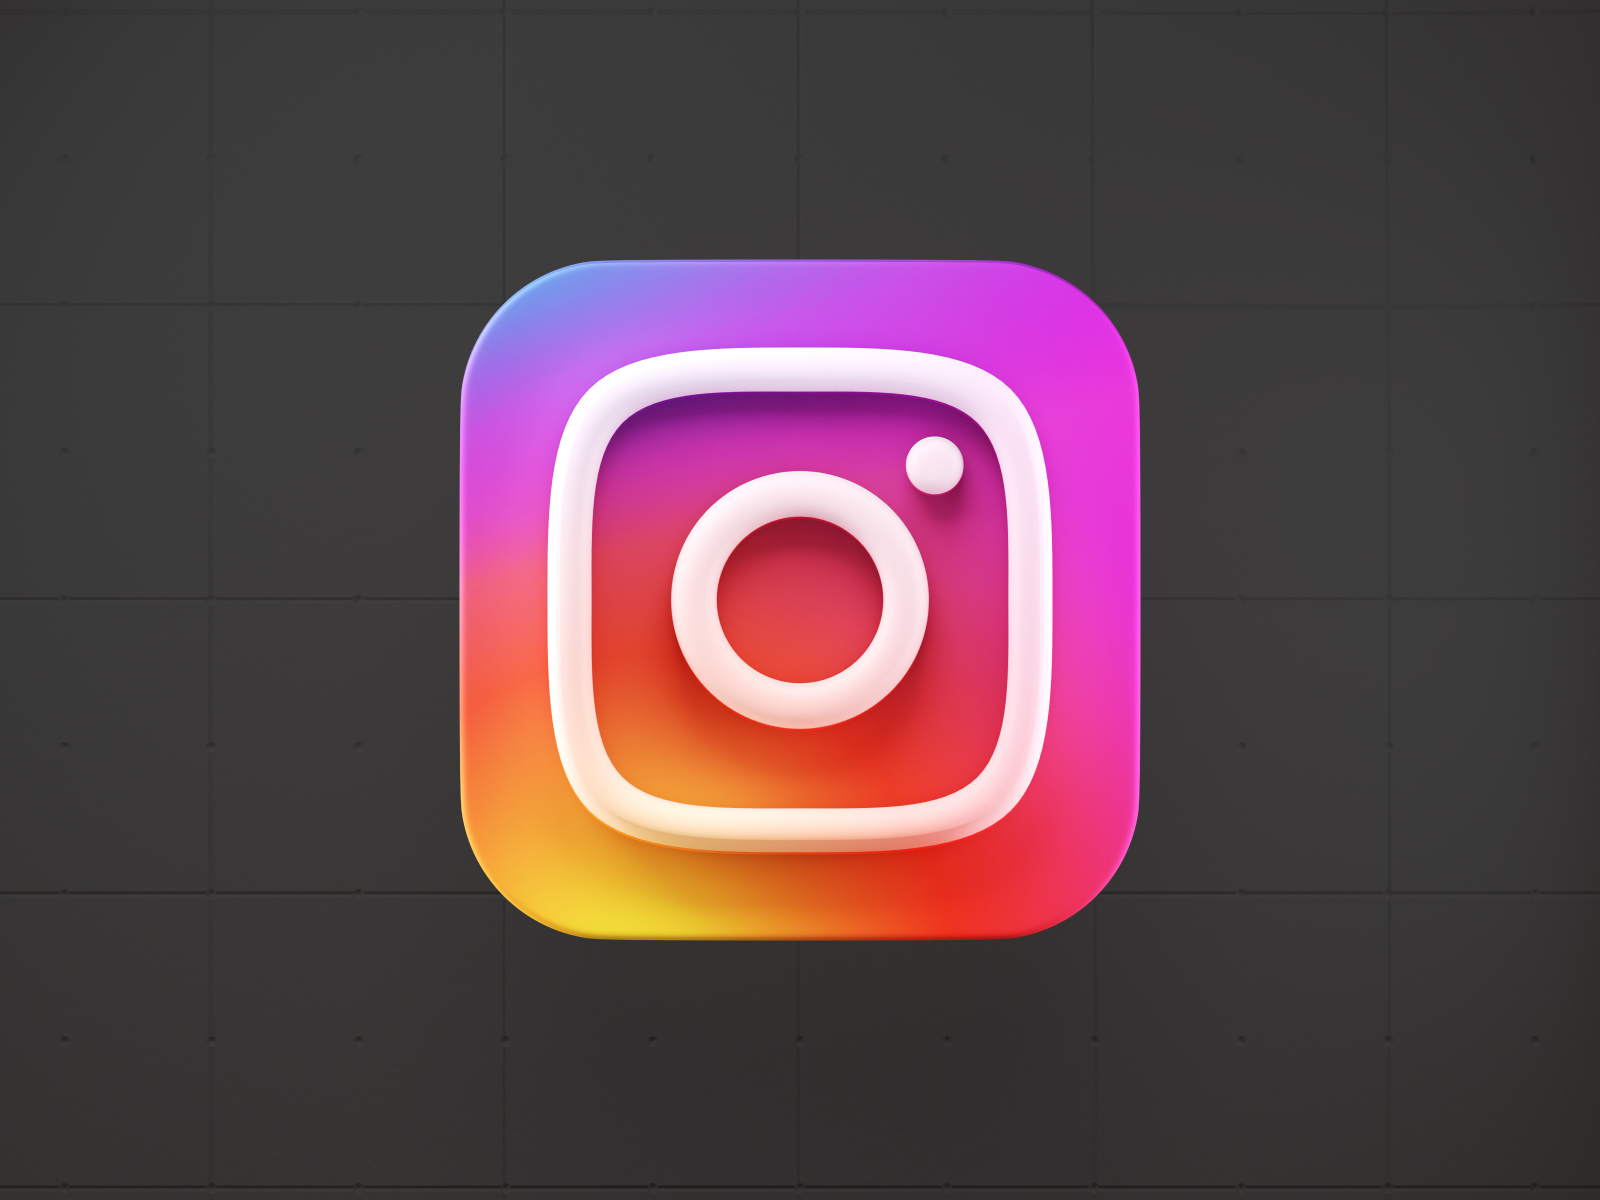 Instagram 3D icon concept by Tien Vi on Dribbble